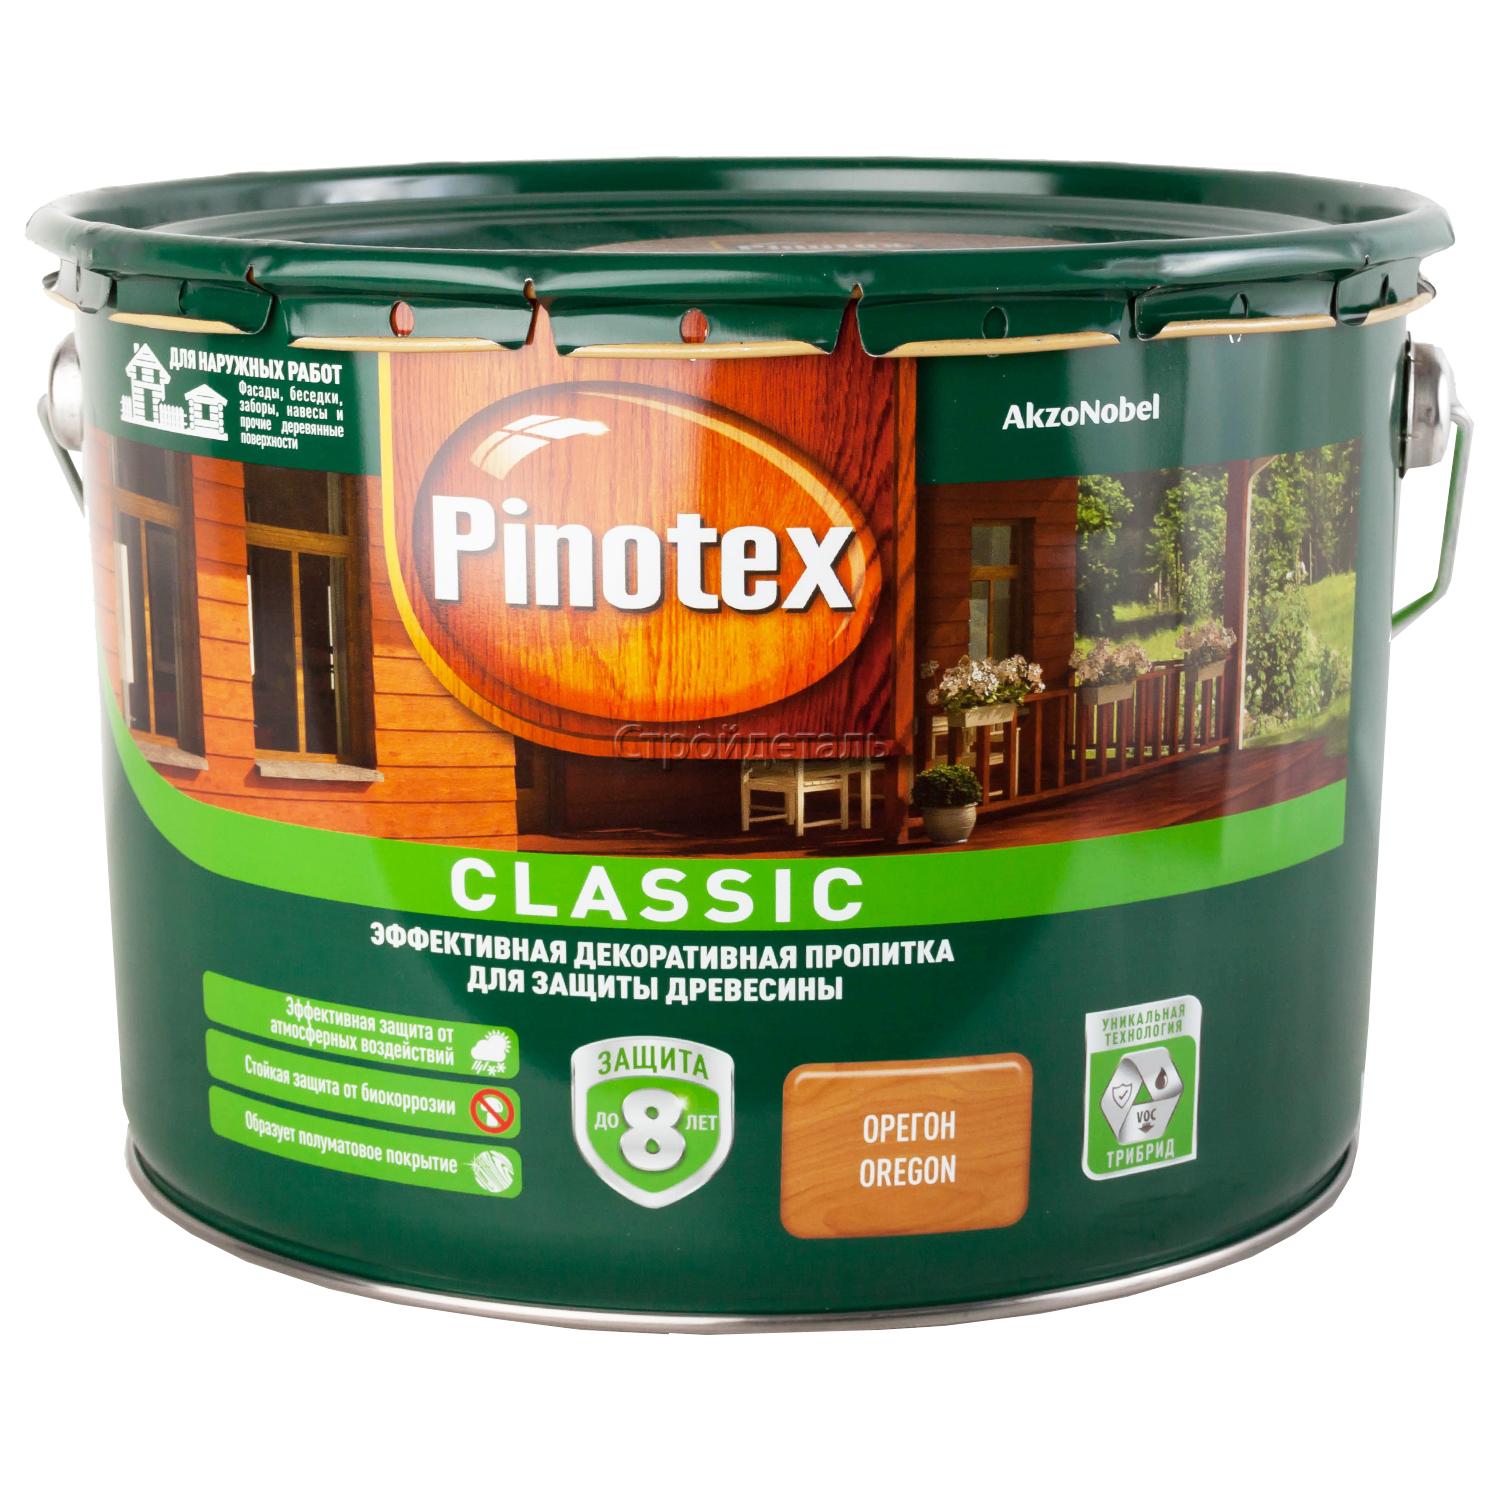 Пропитка антисептик pinotex. Pinotex Classic, 9л, Орегон. Пинотекс Классик Pinotex Classic палисандр 9 л. Пинотекс пропитка палисандр. Pinotex Classic NW антисептик, Орегон 9 л 5270888.